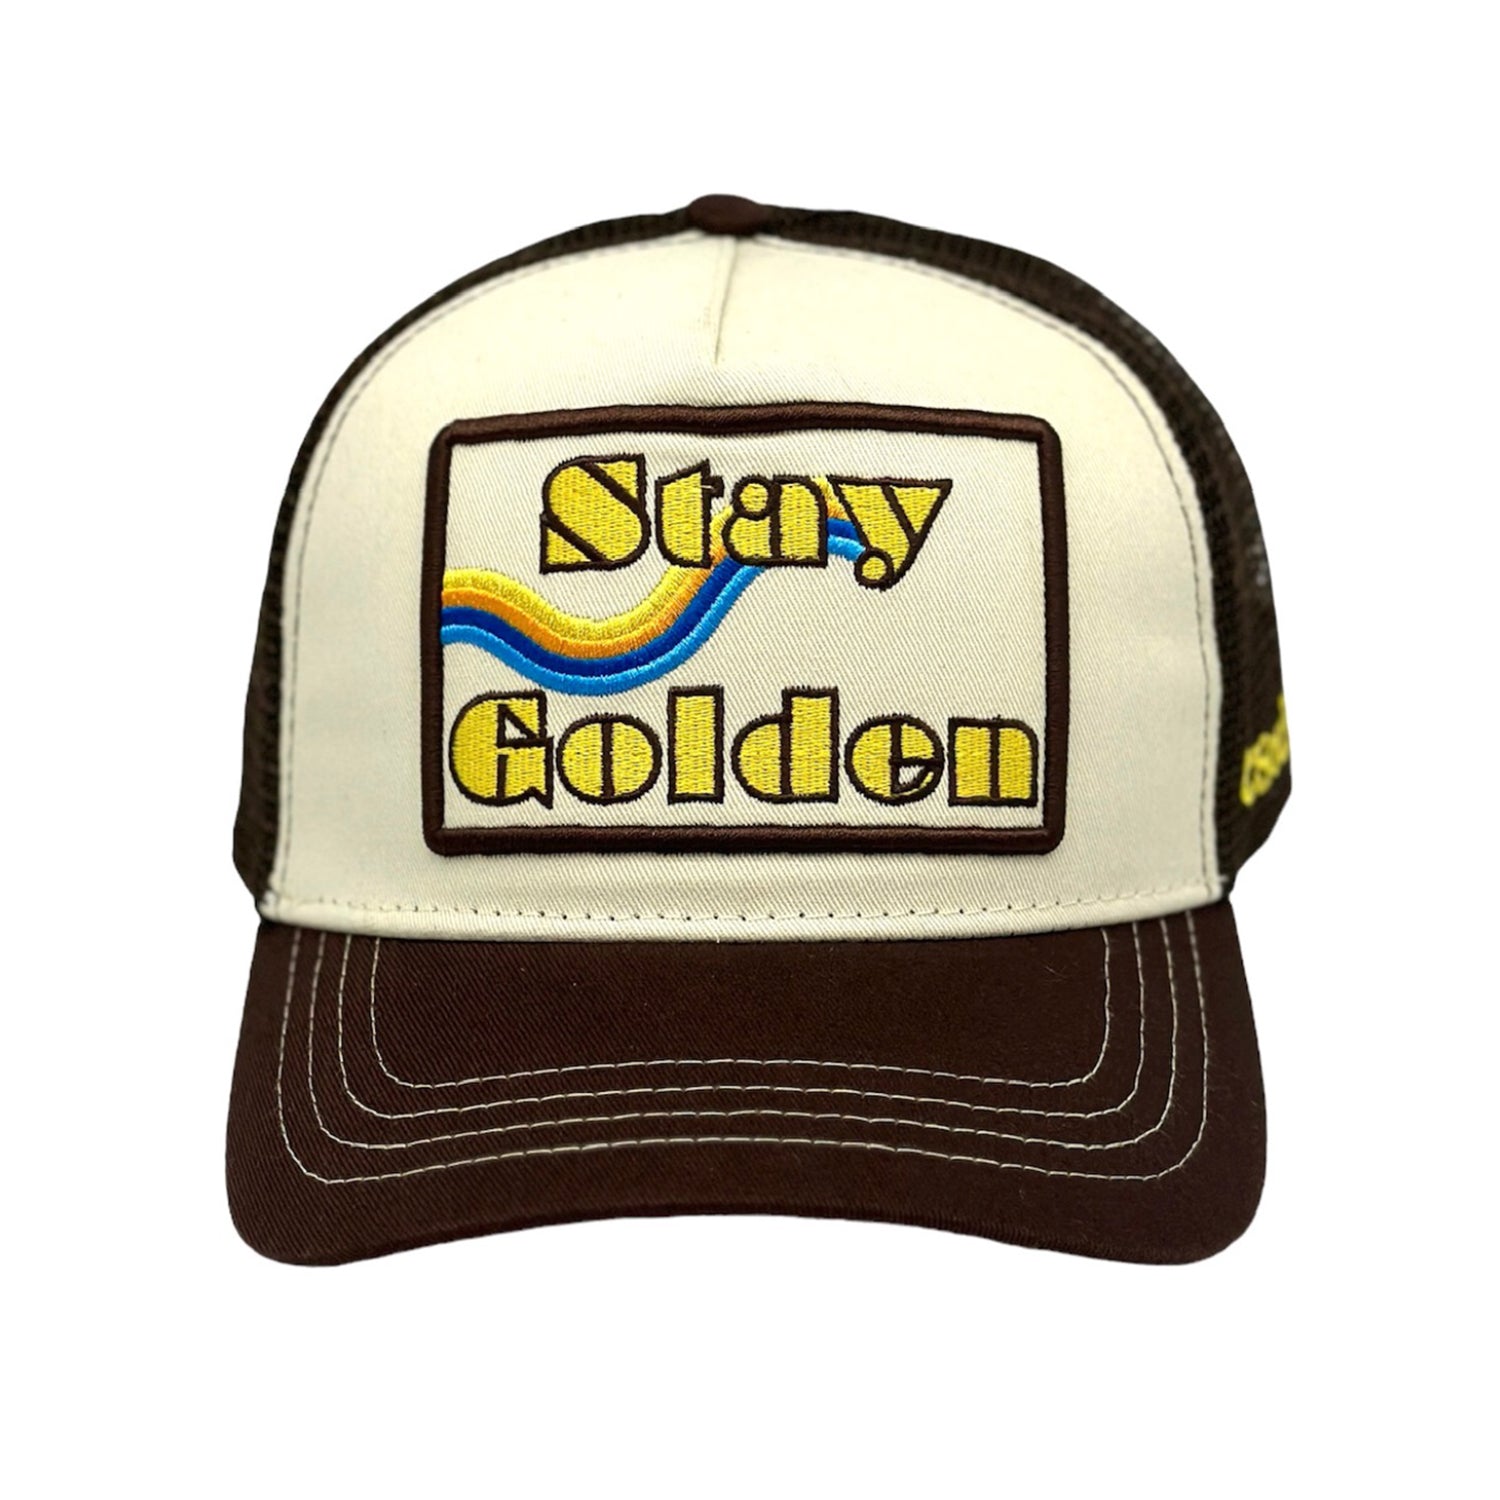 Stay Golden Trucker - Brown